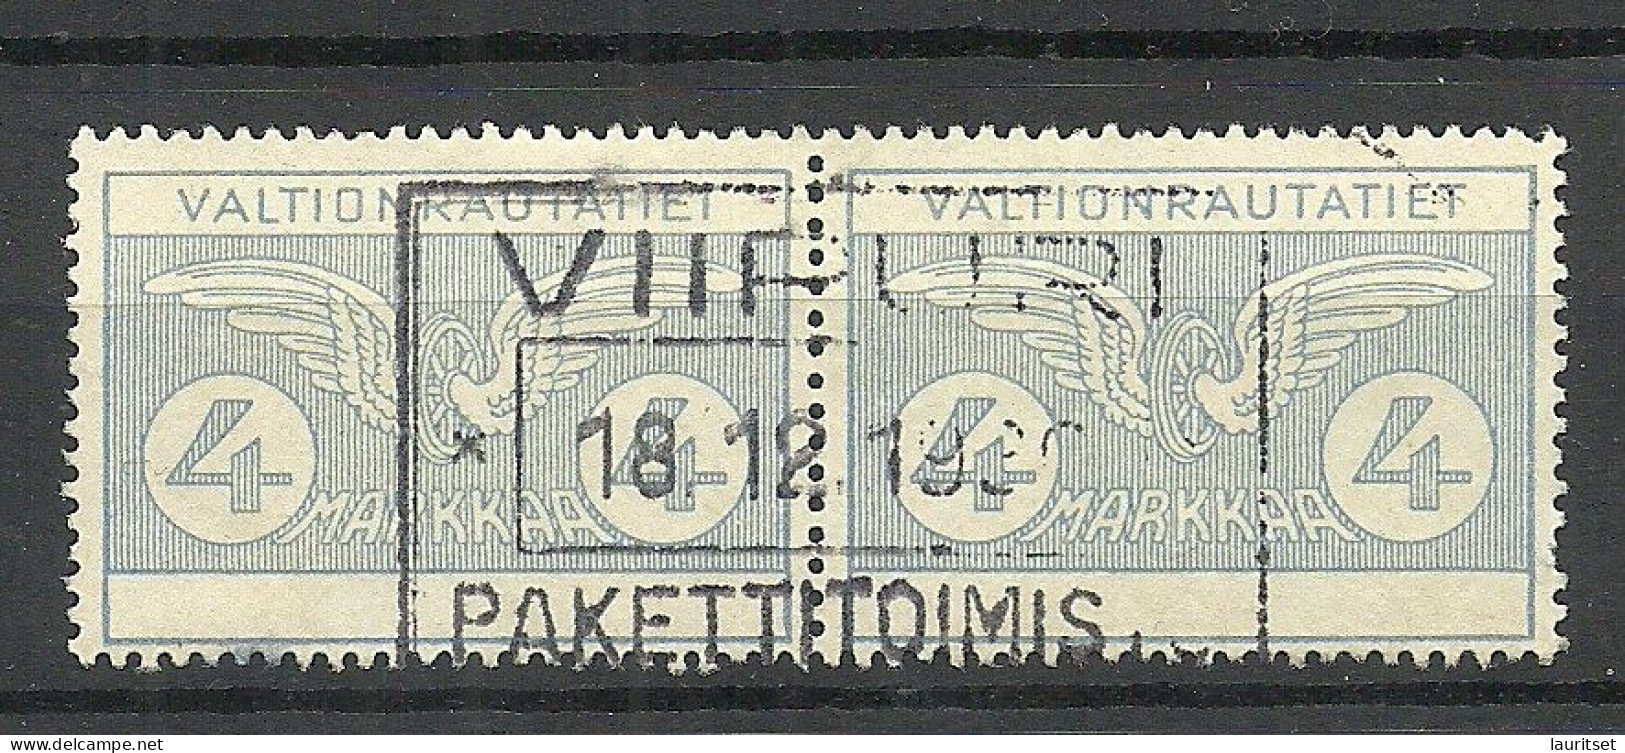 FINLAND FINNLAND 1930ies O Viipuri Railway Stamp 4 MK As Pair - Pacchi Postali